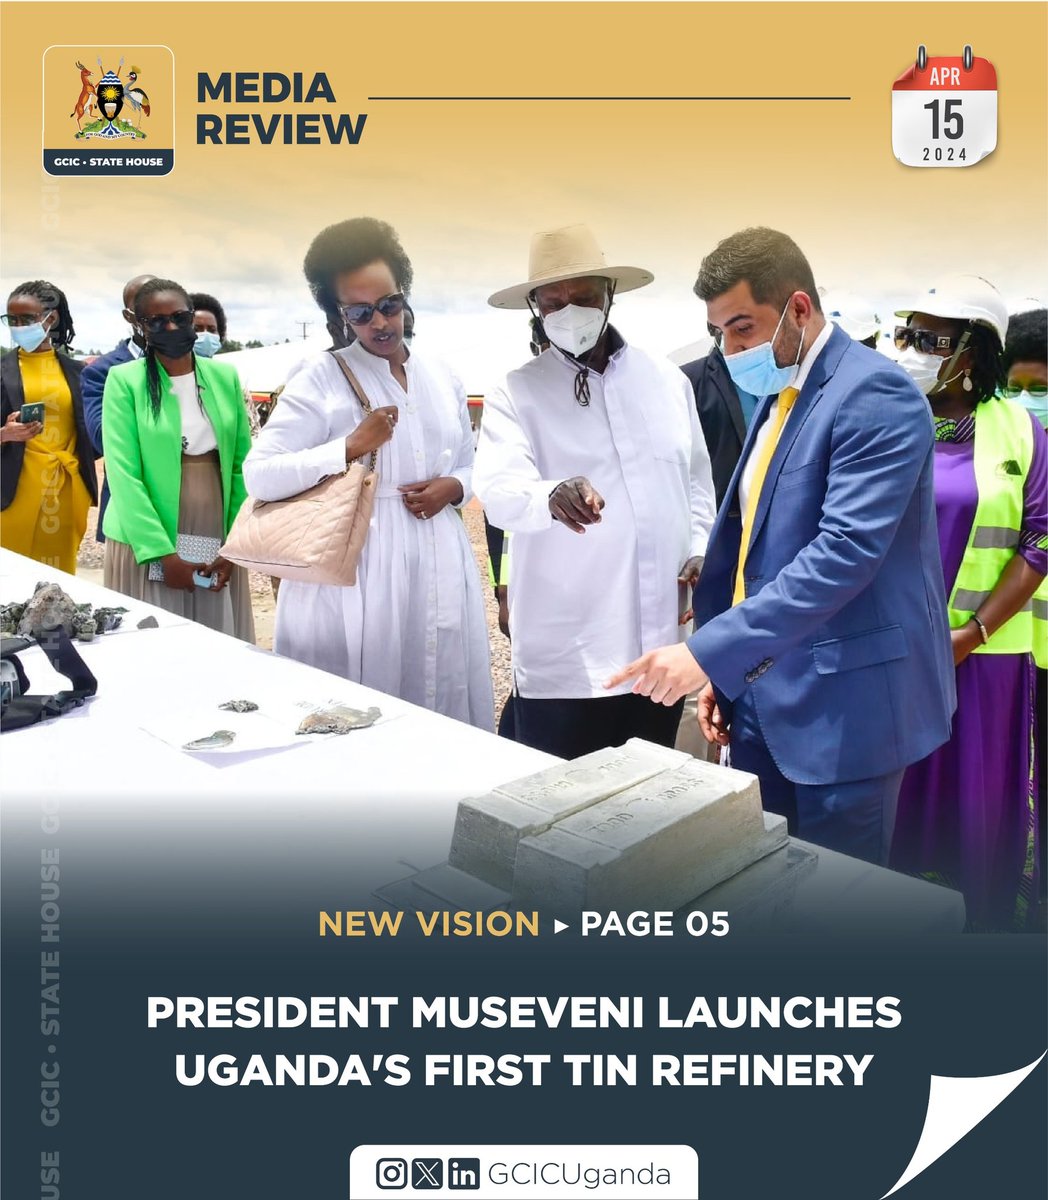 H.E. President @KagutaMuseveni launches Uganda's first tin refinery. #OpenGovUg media.gcic.go.ug/gcicmediarevie…